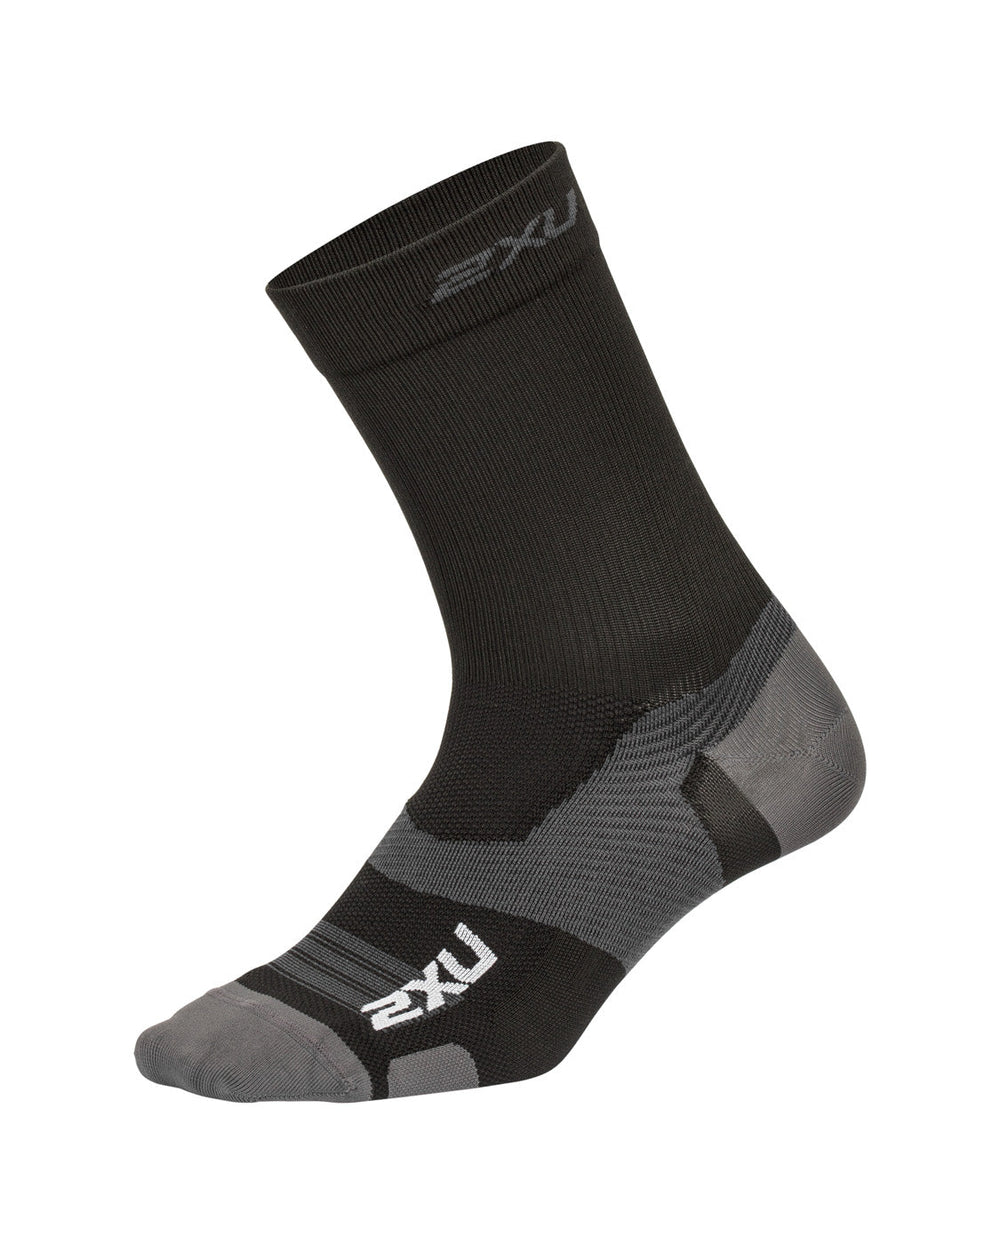 2XU Vectr Ultralight Crew Unisex Cycling Socks (Black/Titanium)